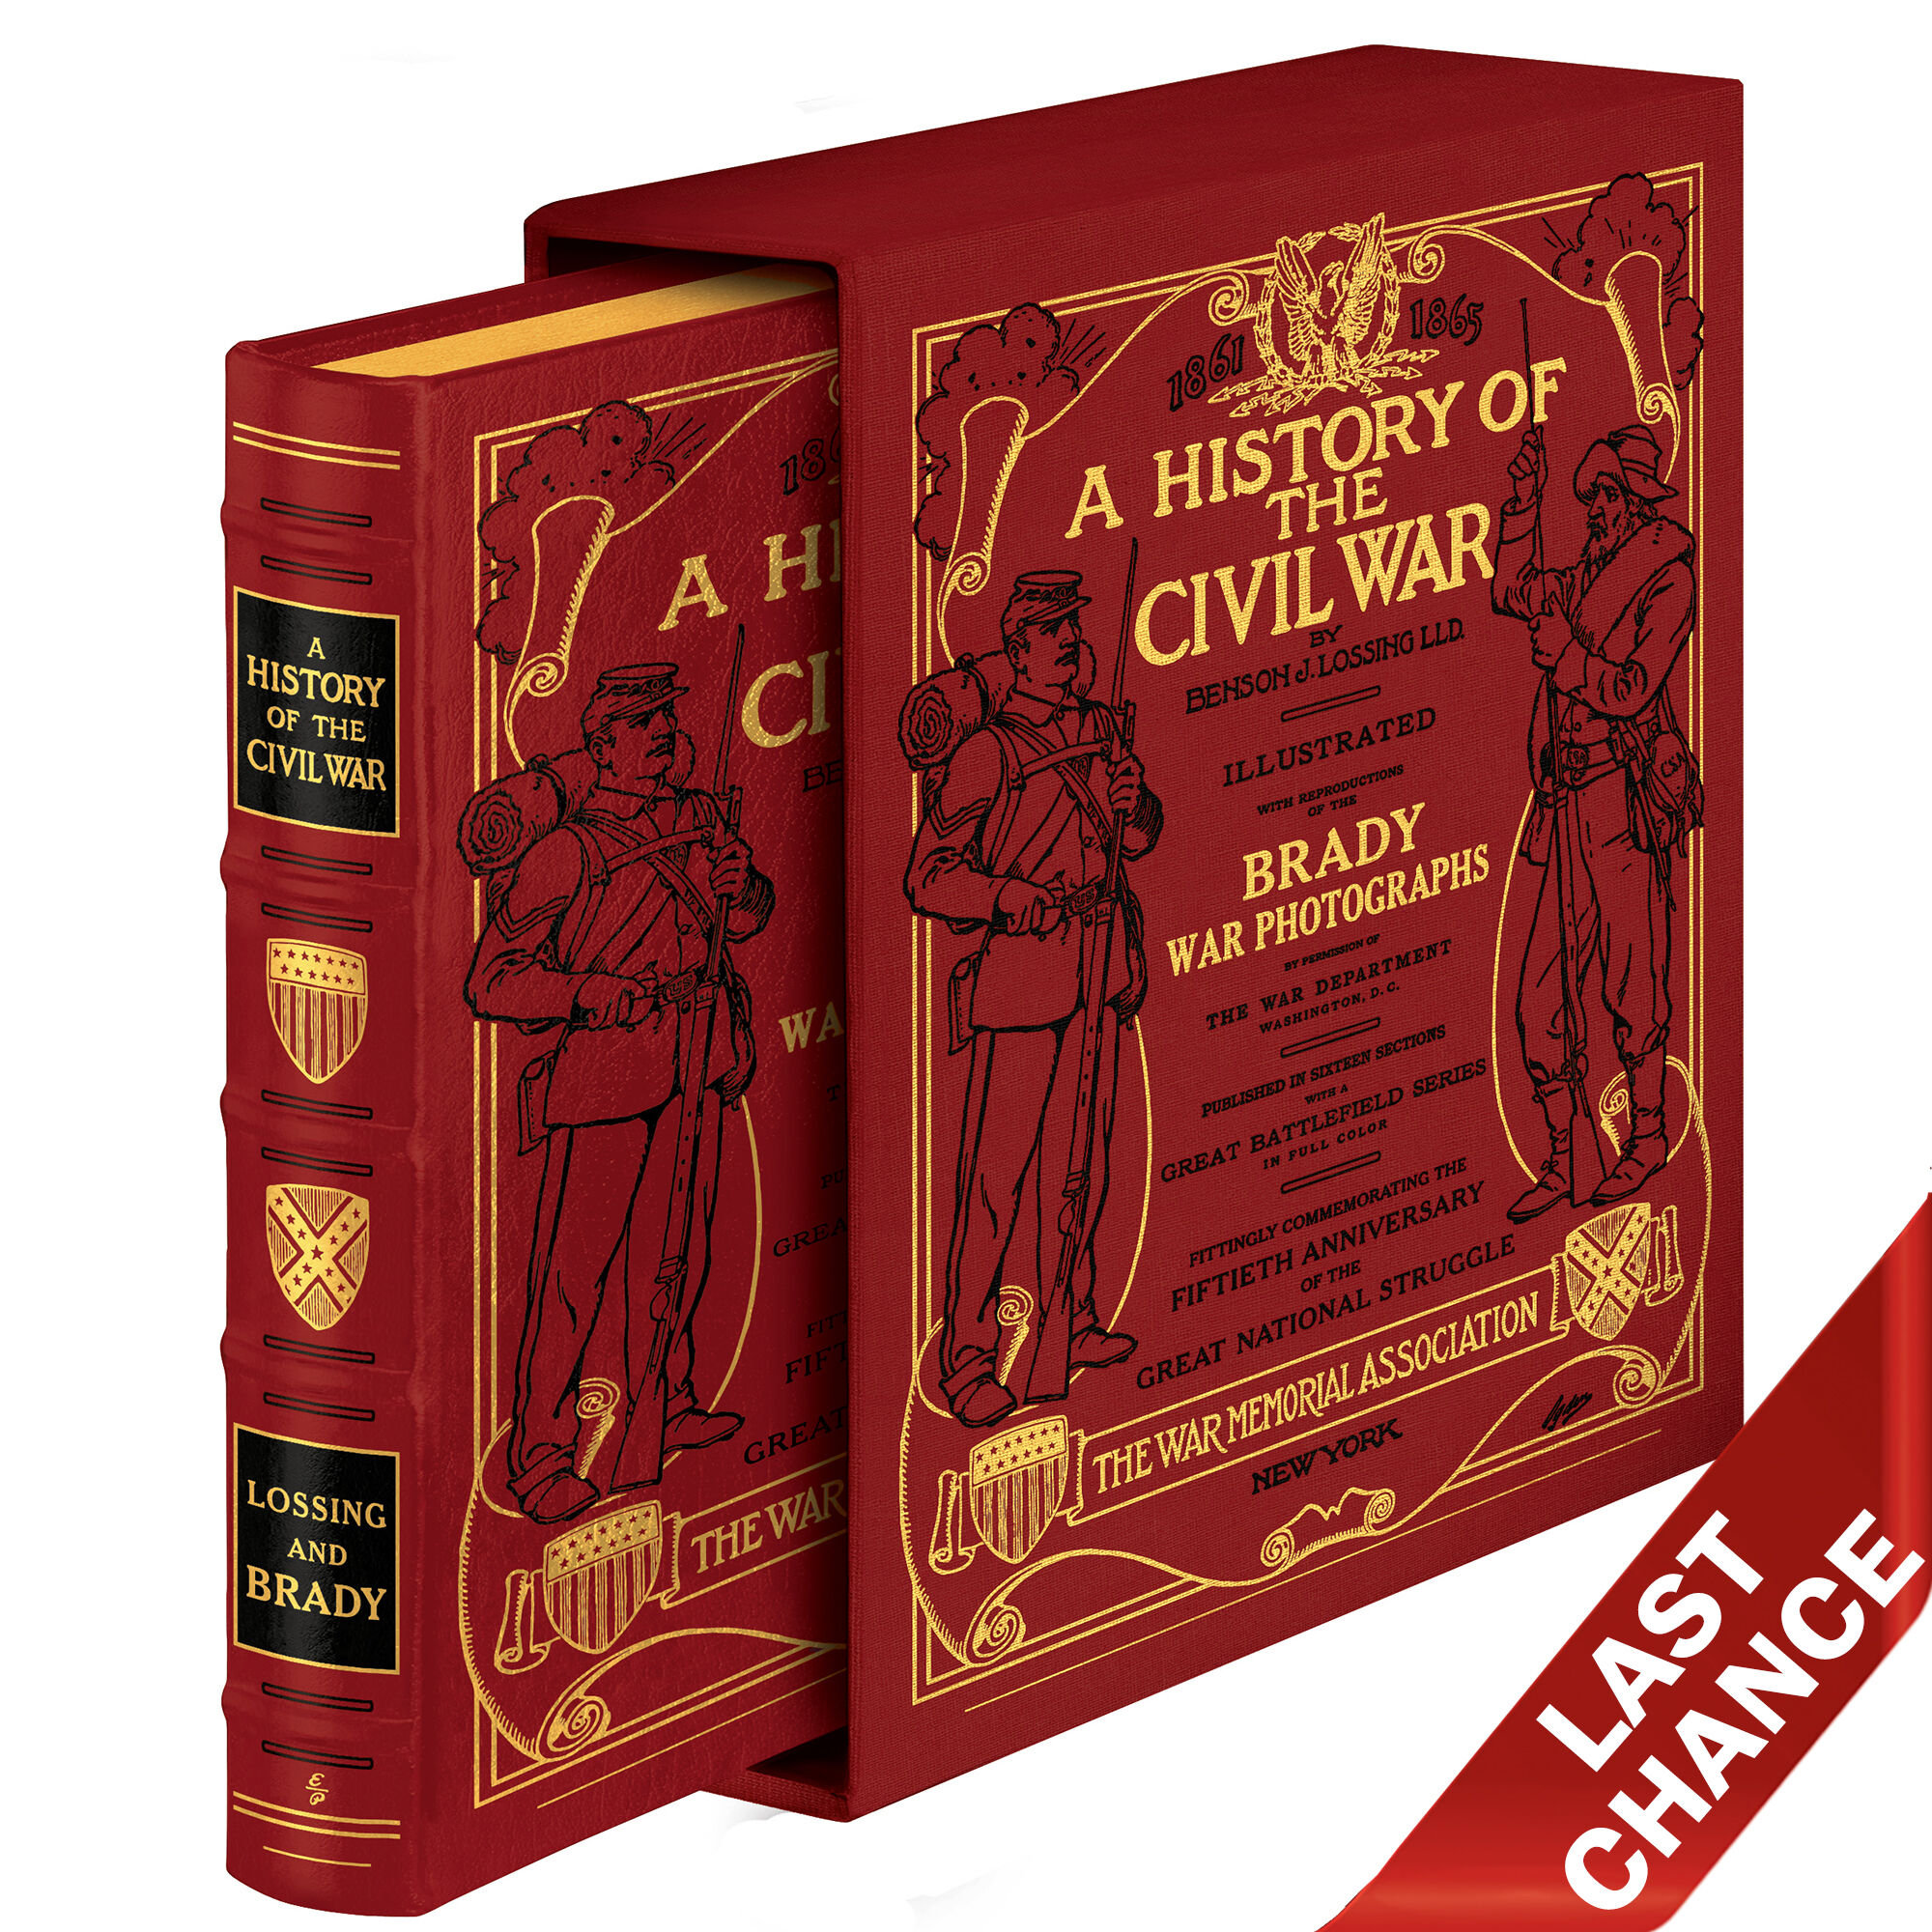 A History of the Civil War 2579 z cvr LQ